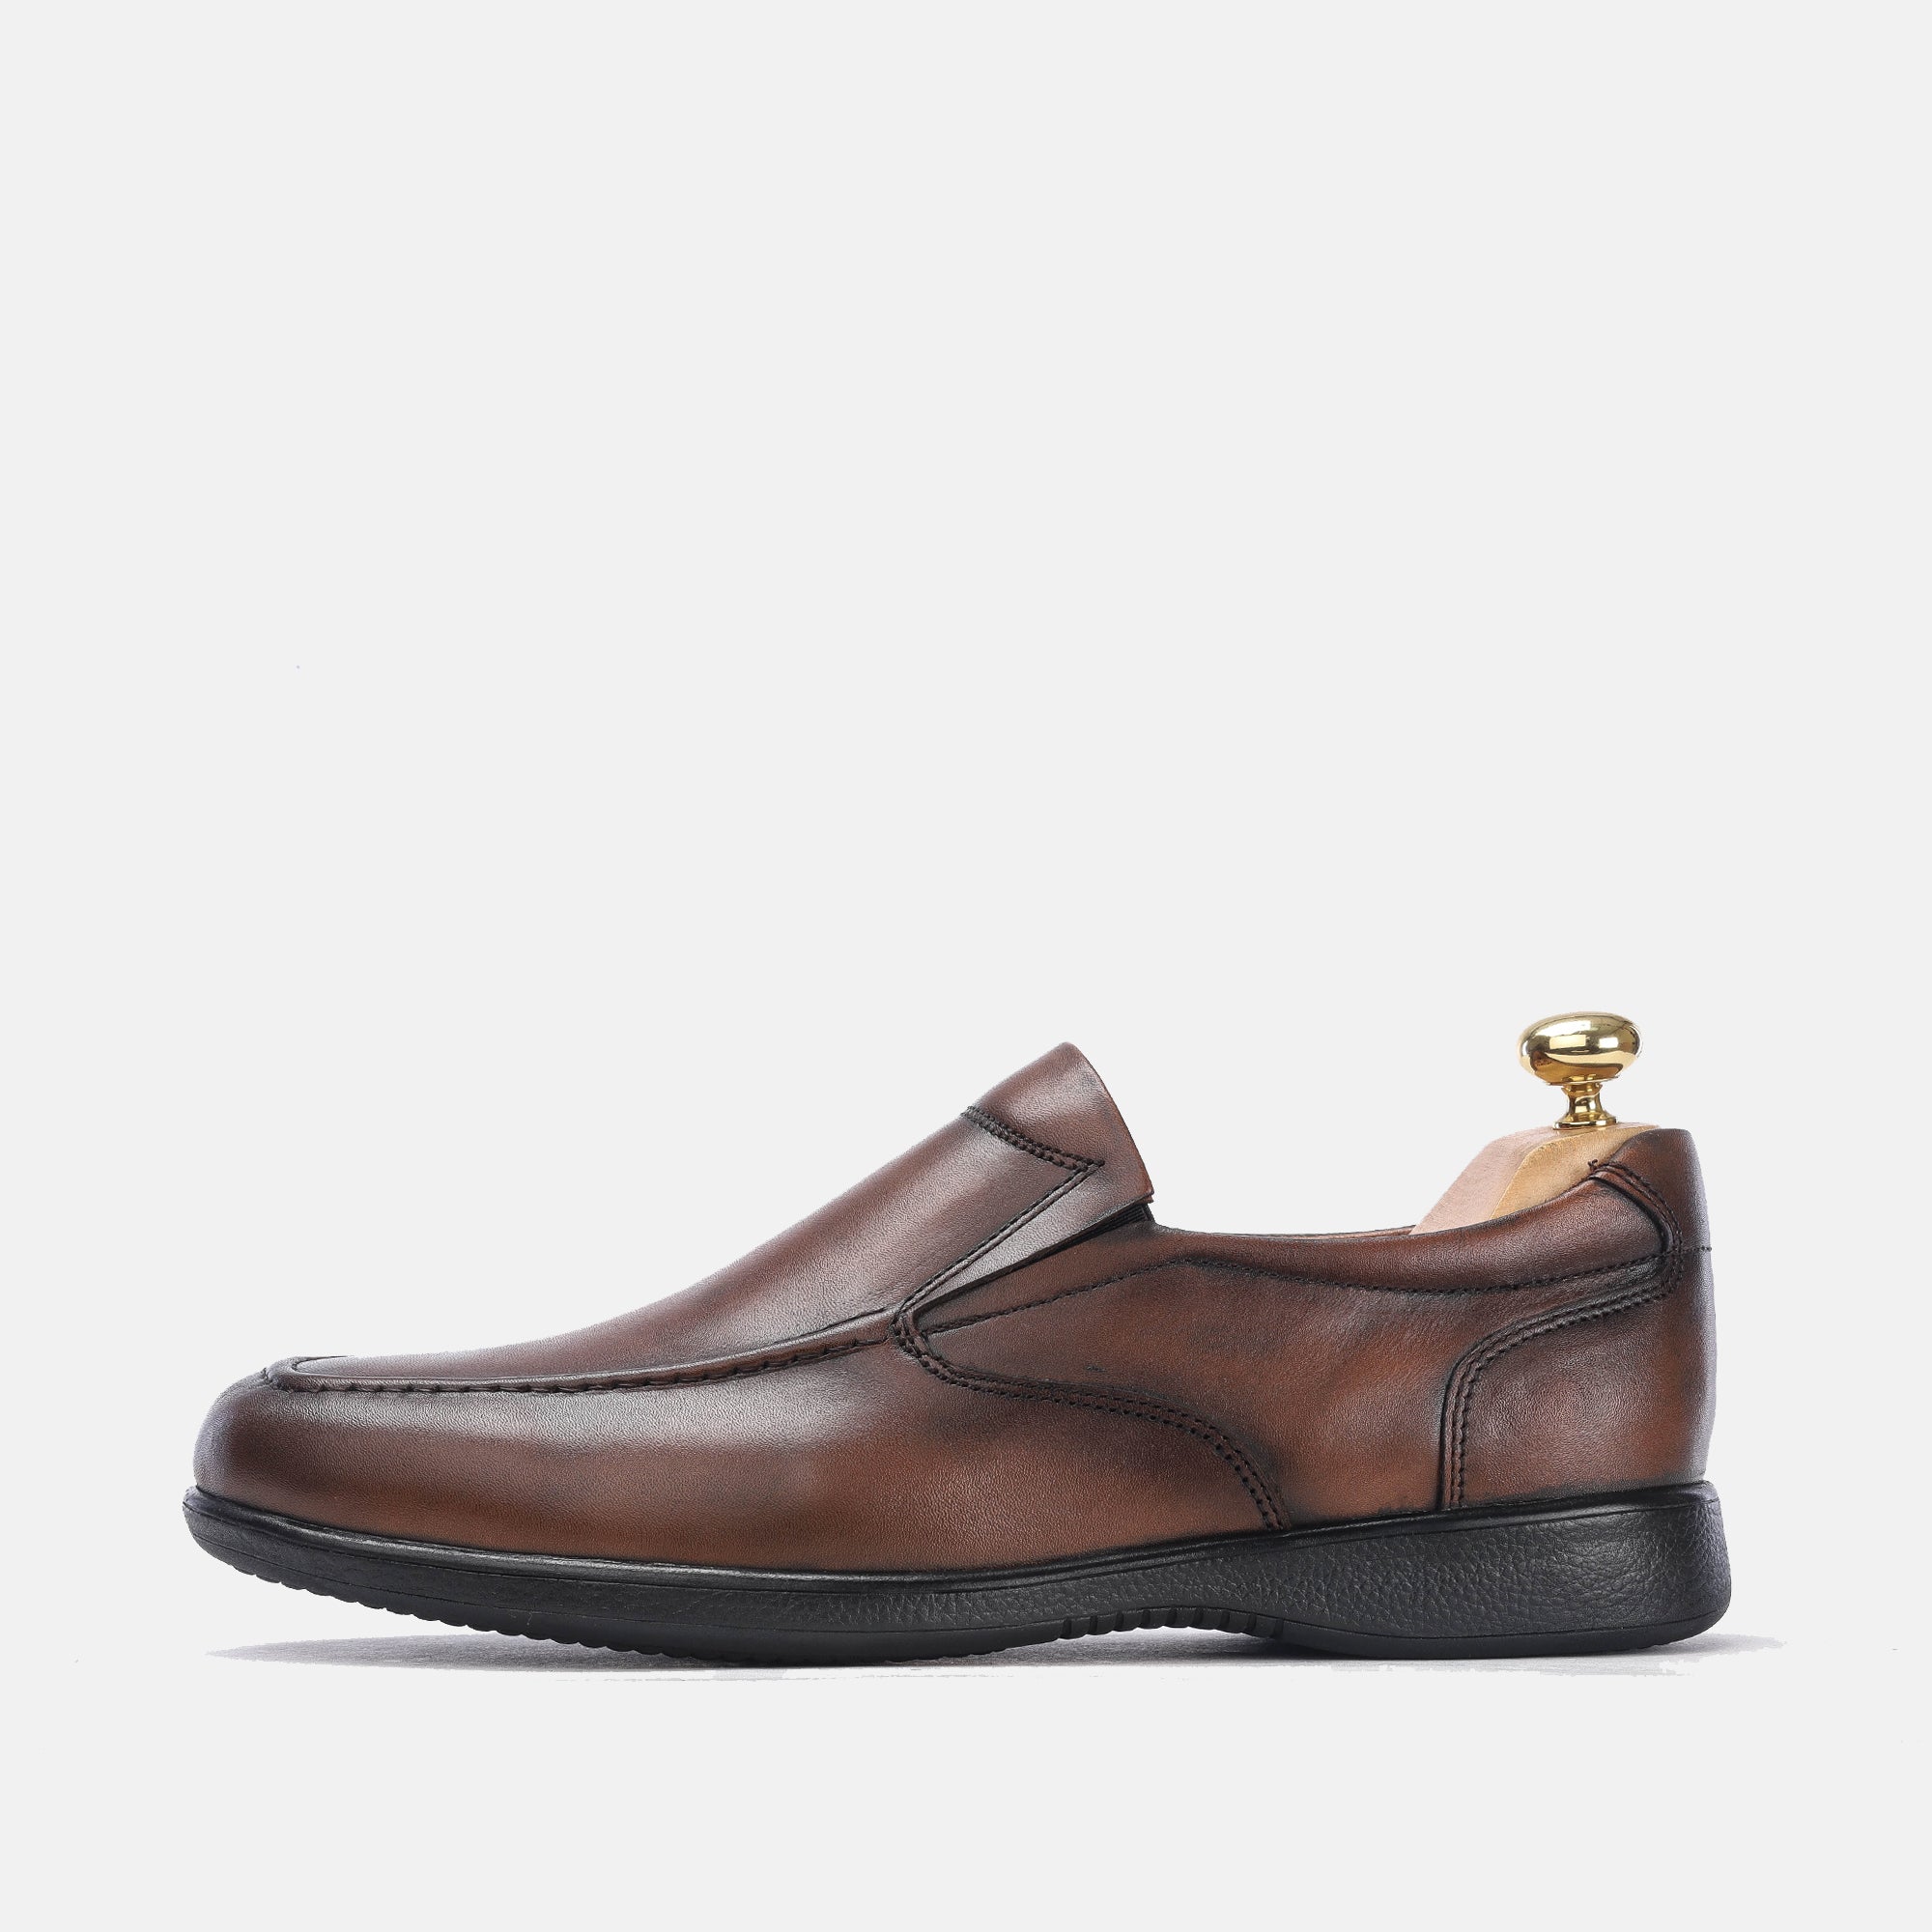 '5163 chaussure cuir marron vintage